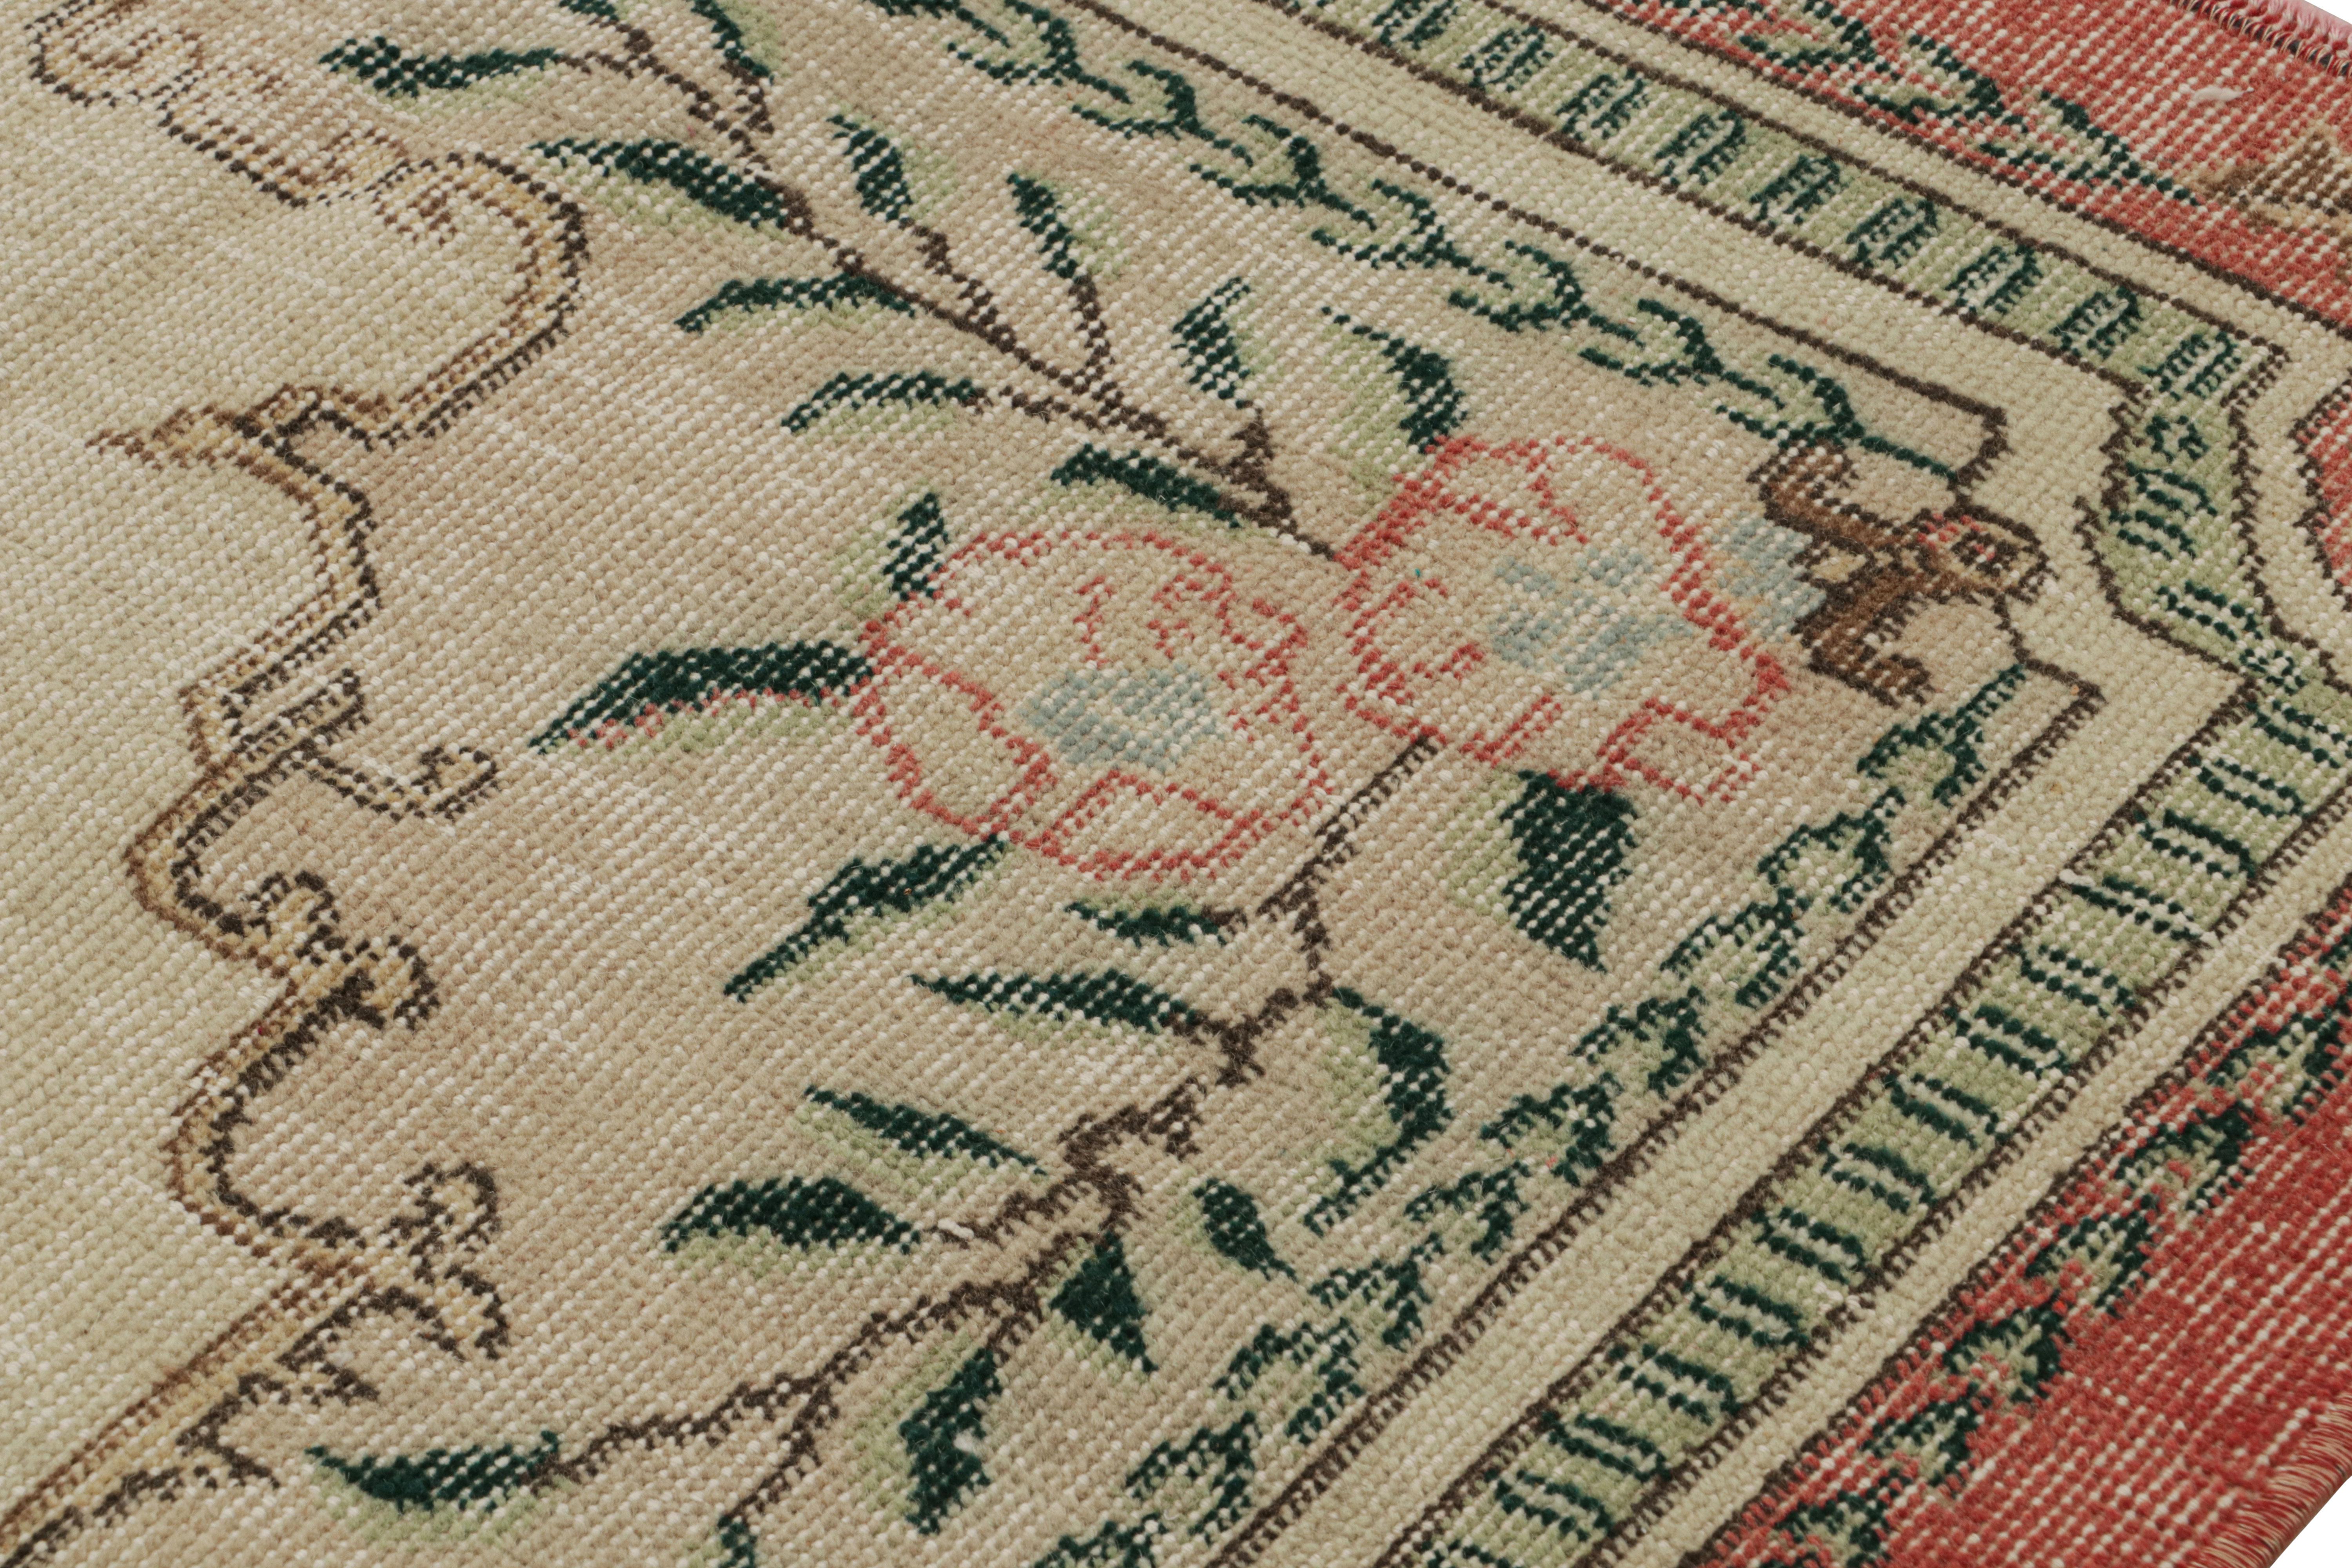 Hand-Knotted Vintage Zeki Müren Rug, with Floral Geometric Patterns, from Rug & Kilim For Sale